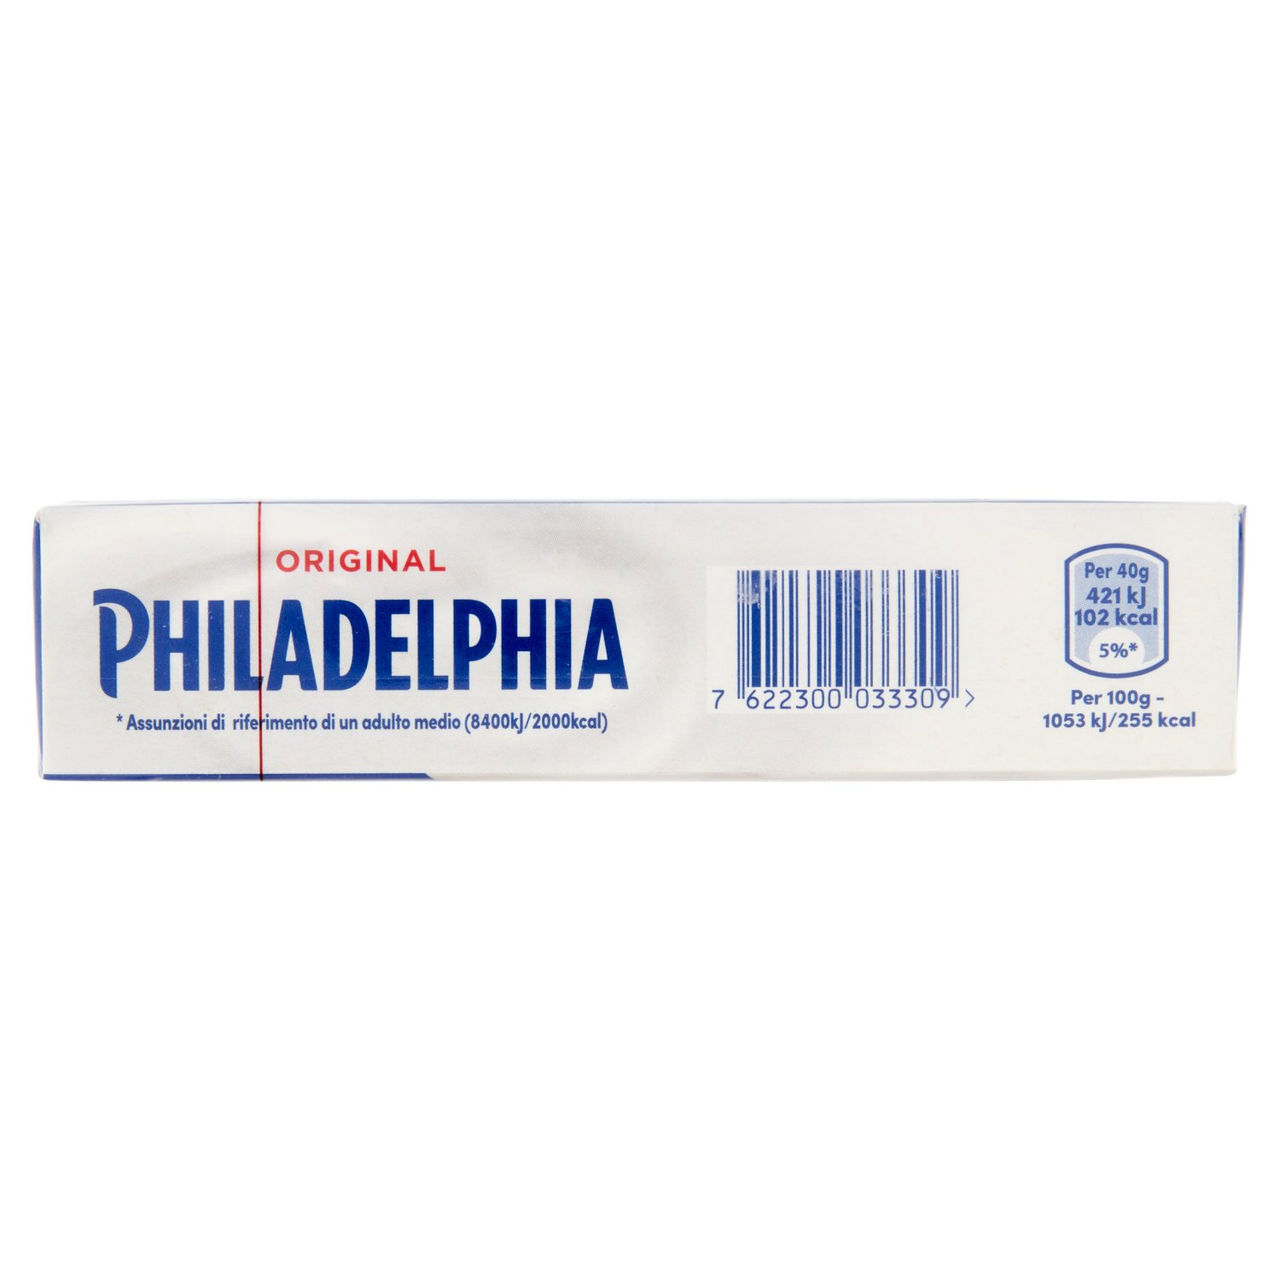 Philadelphia Original 2 x 80 g